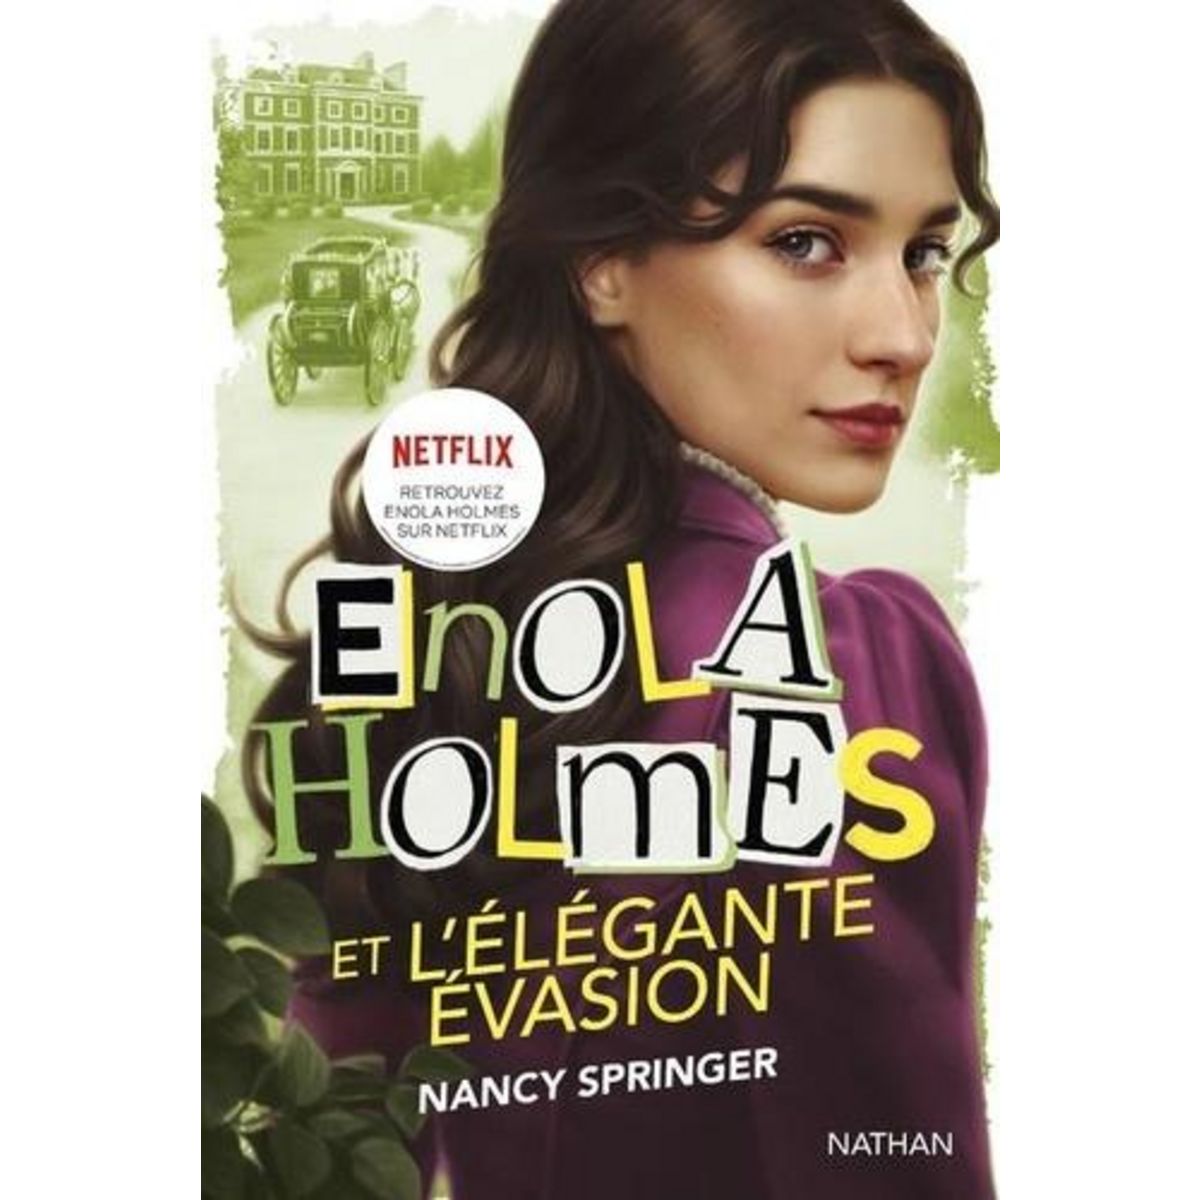  LES ENQUETES D'ENOLA HOLMES : ENOLA HOLMES ET L'ELEGANTE EVASION, Springer Nancy